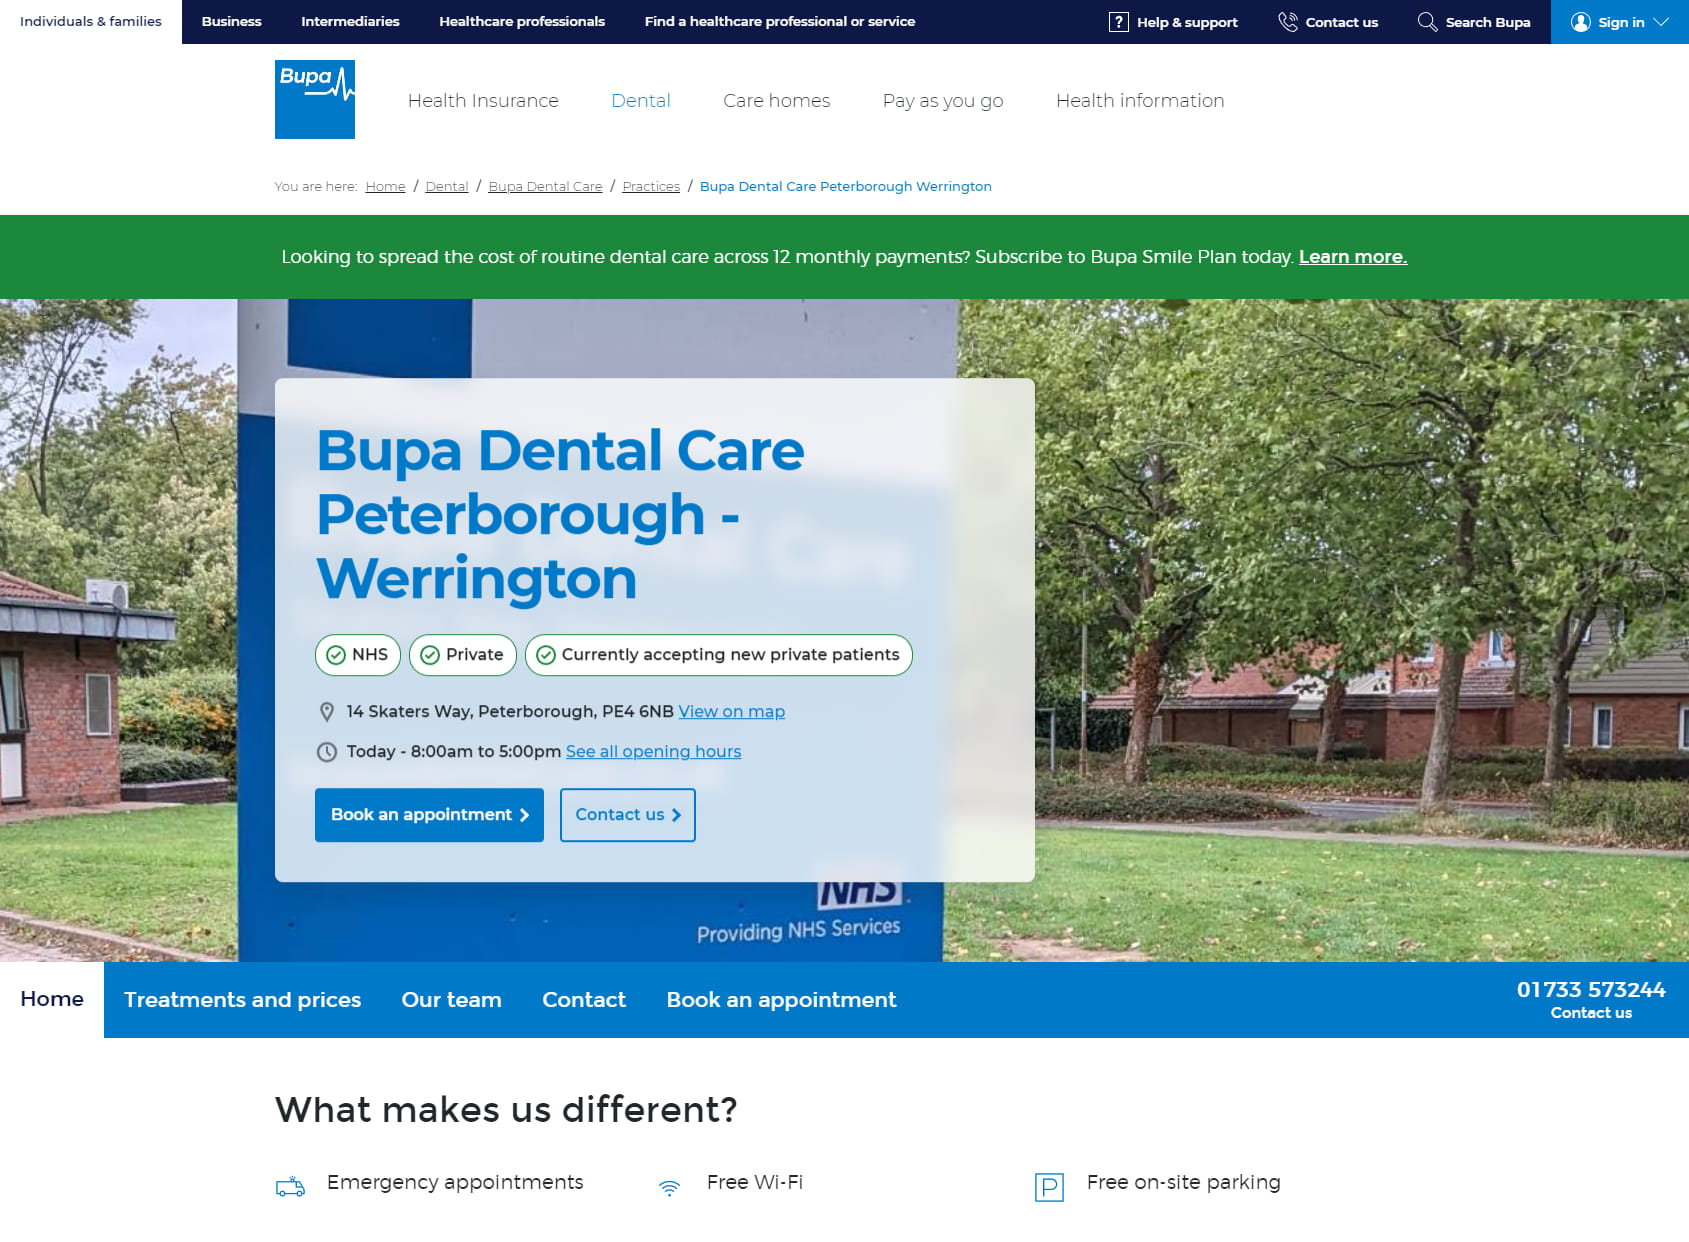 Bupa Dental Care Peterborough - Werrington